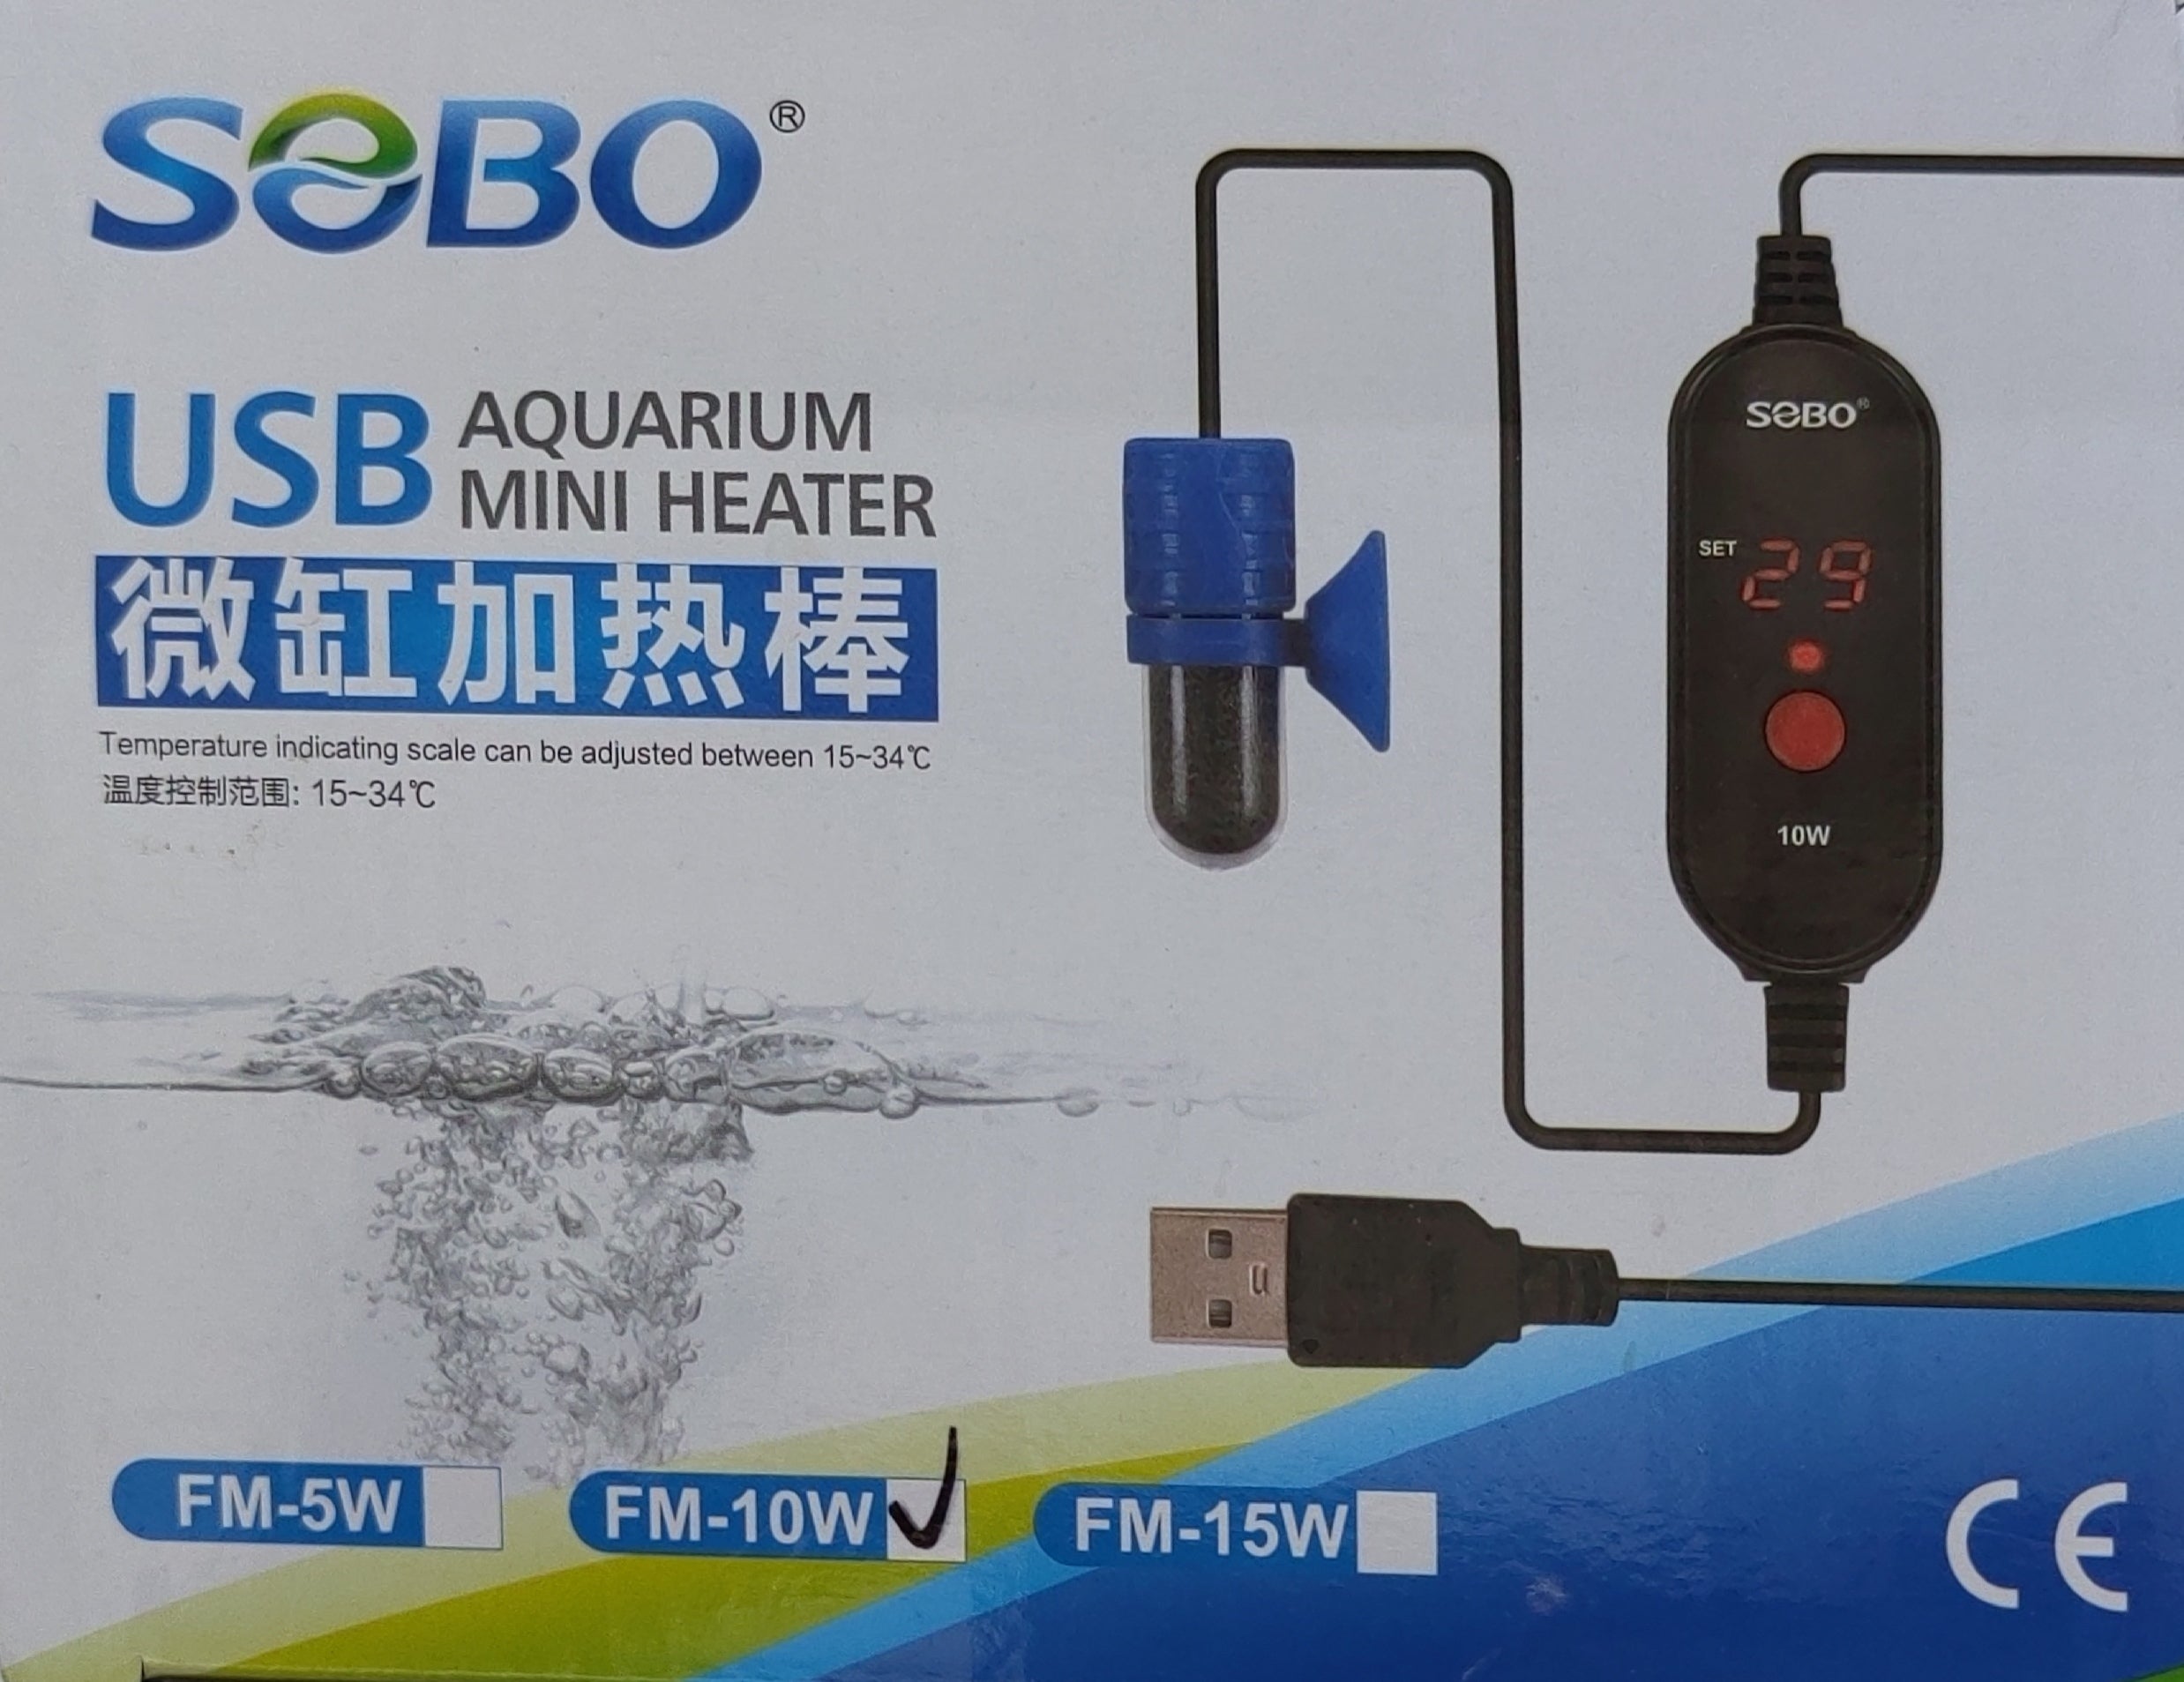 Sobo USB Mini Aquarium Heater